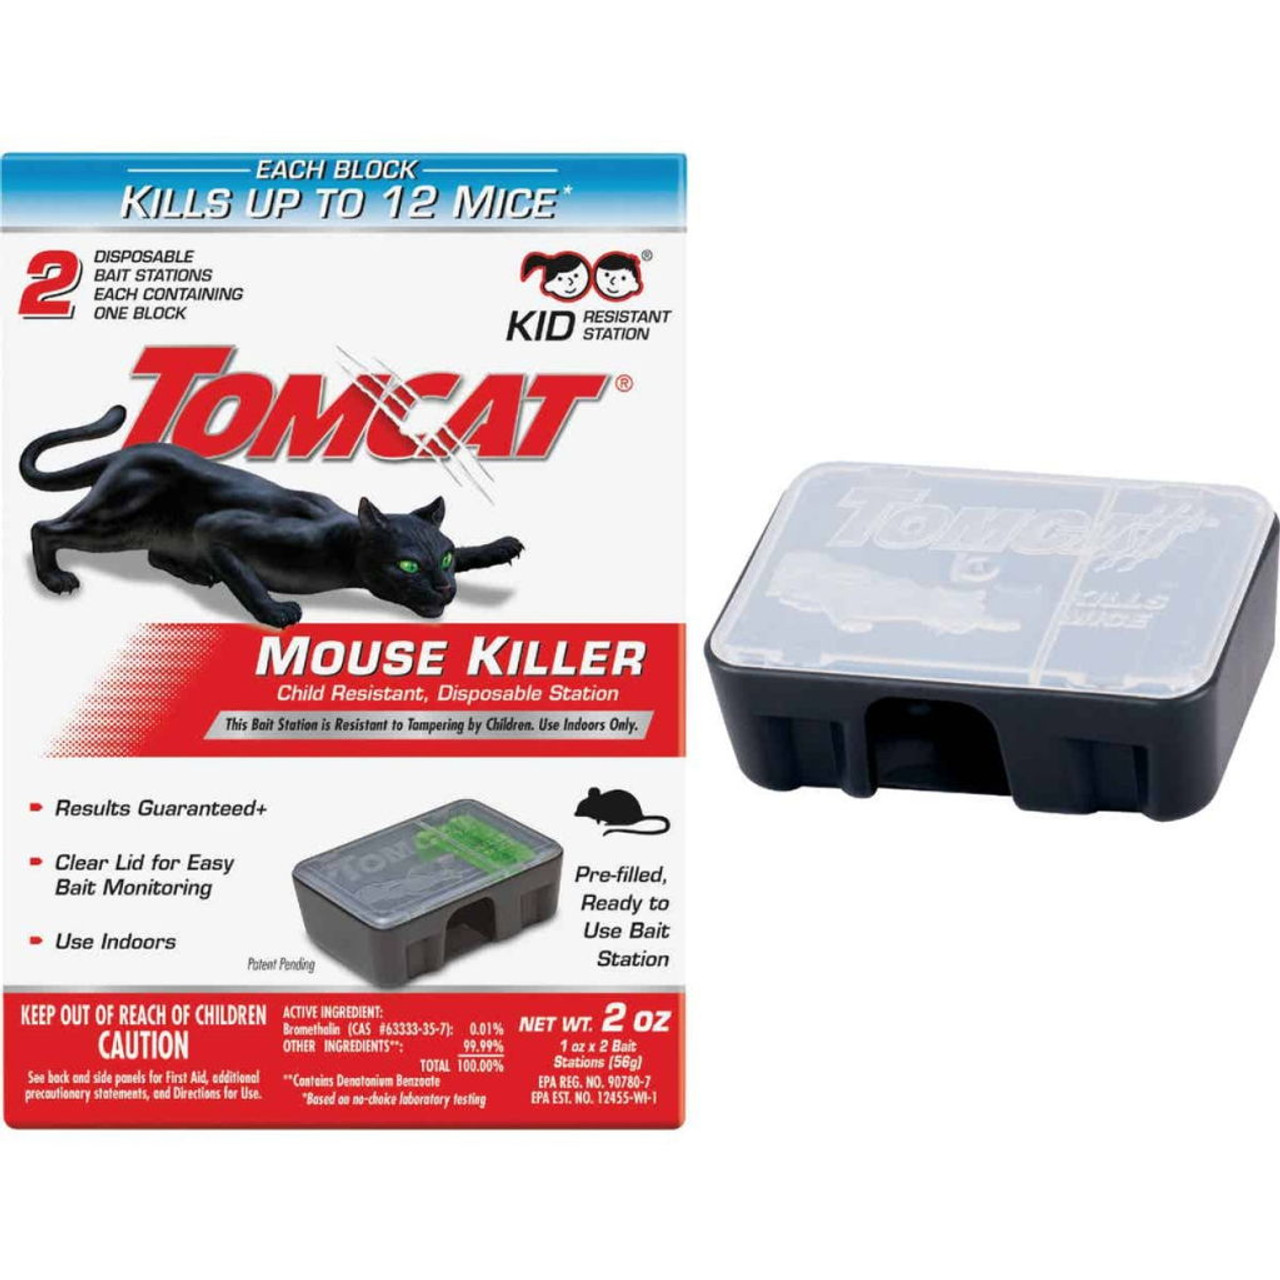  Tomcat Mouse Killer Child Resistant, Disposable